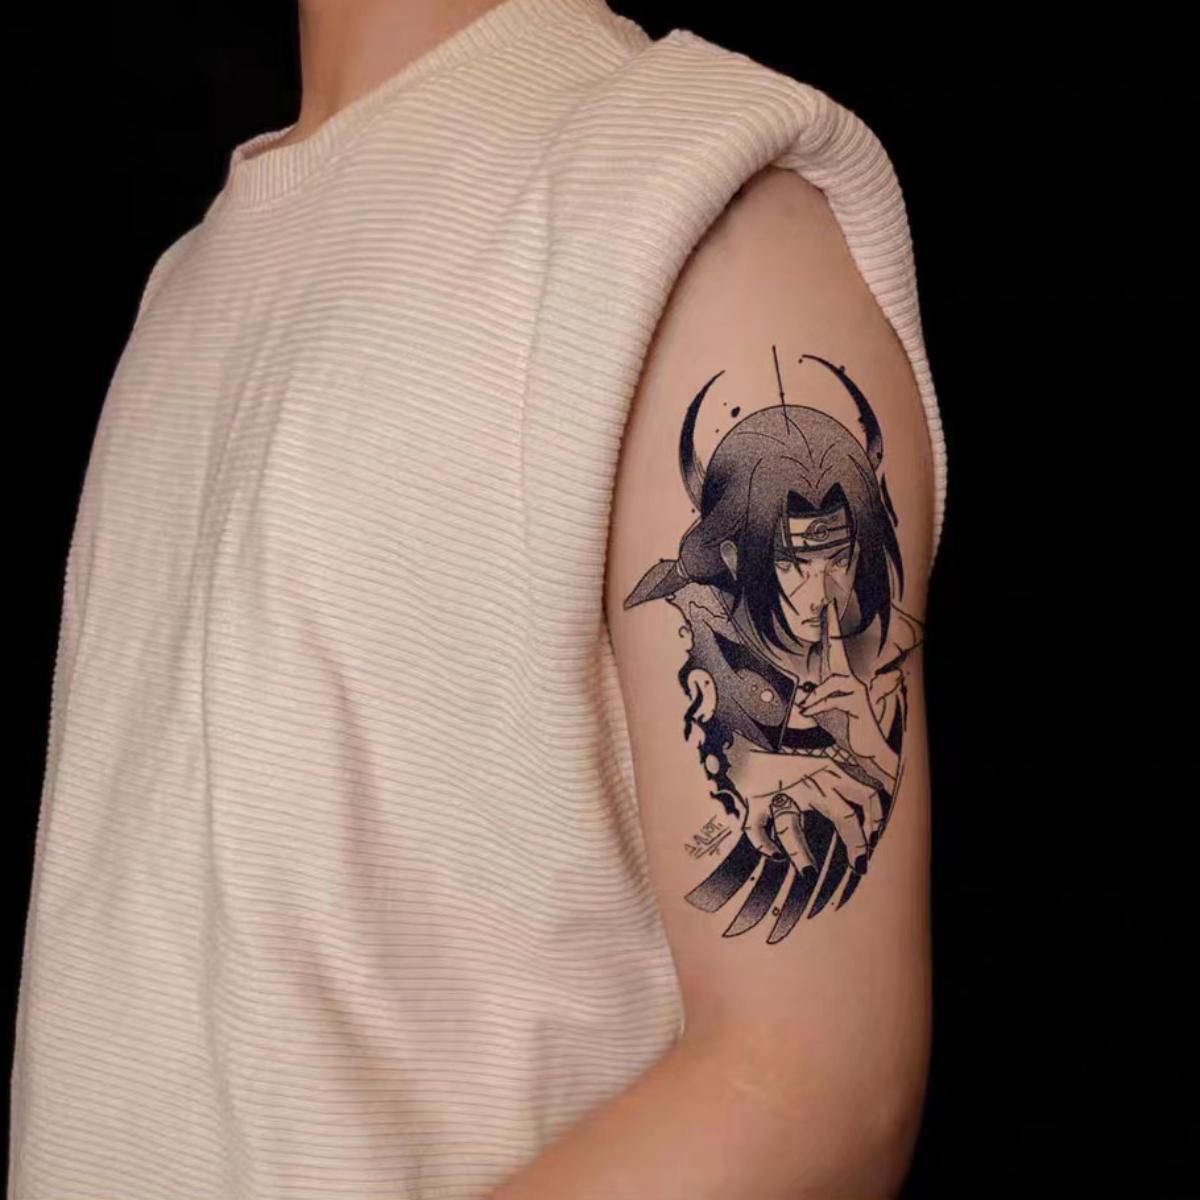 uchiha tribute tattoo by soul-baund on DeviantArt